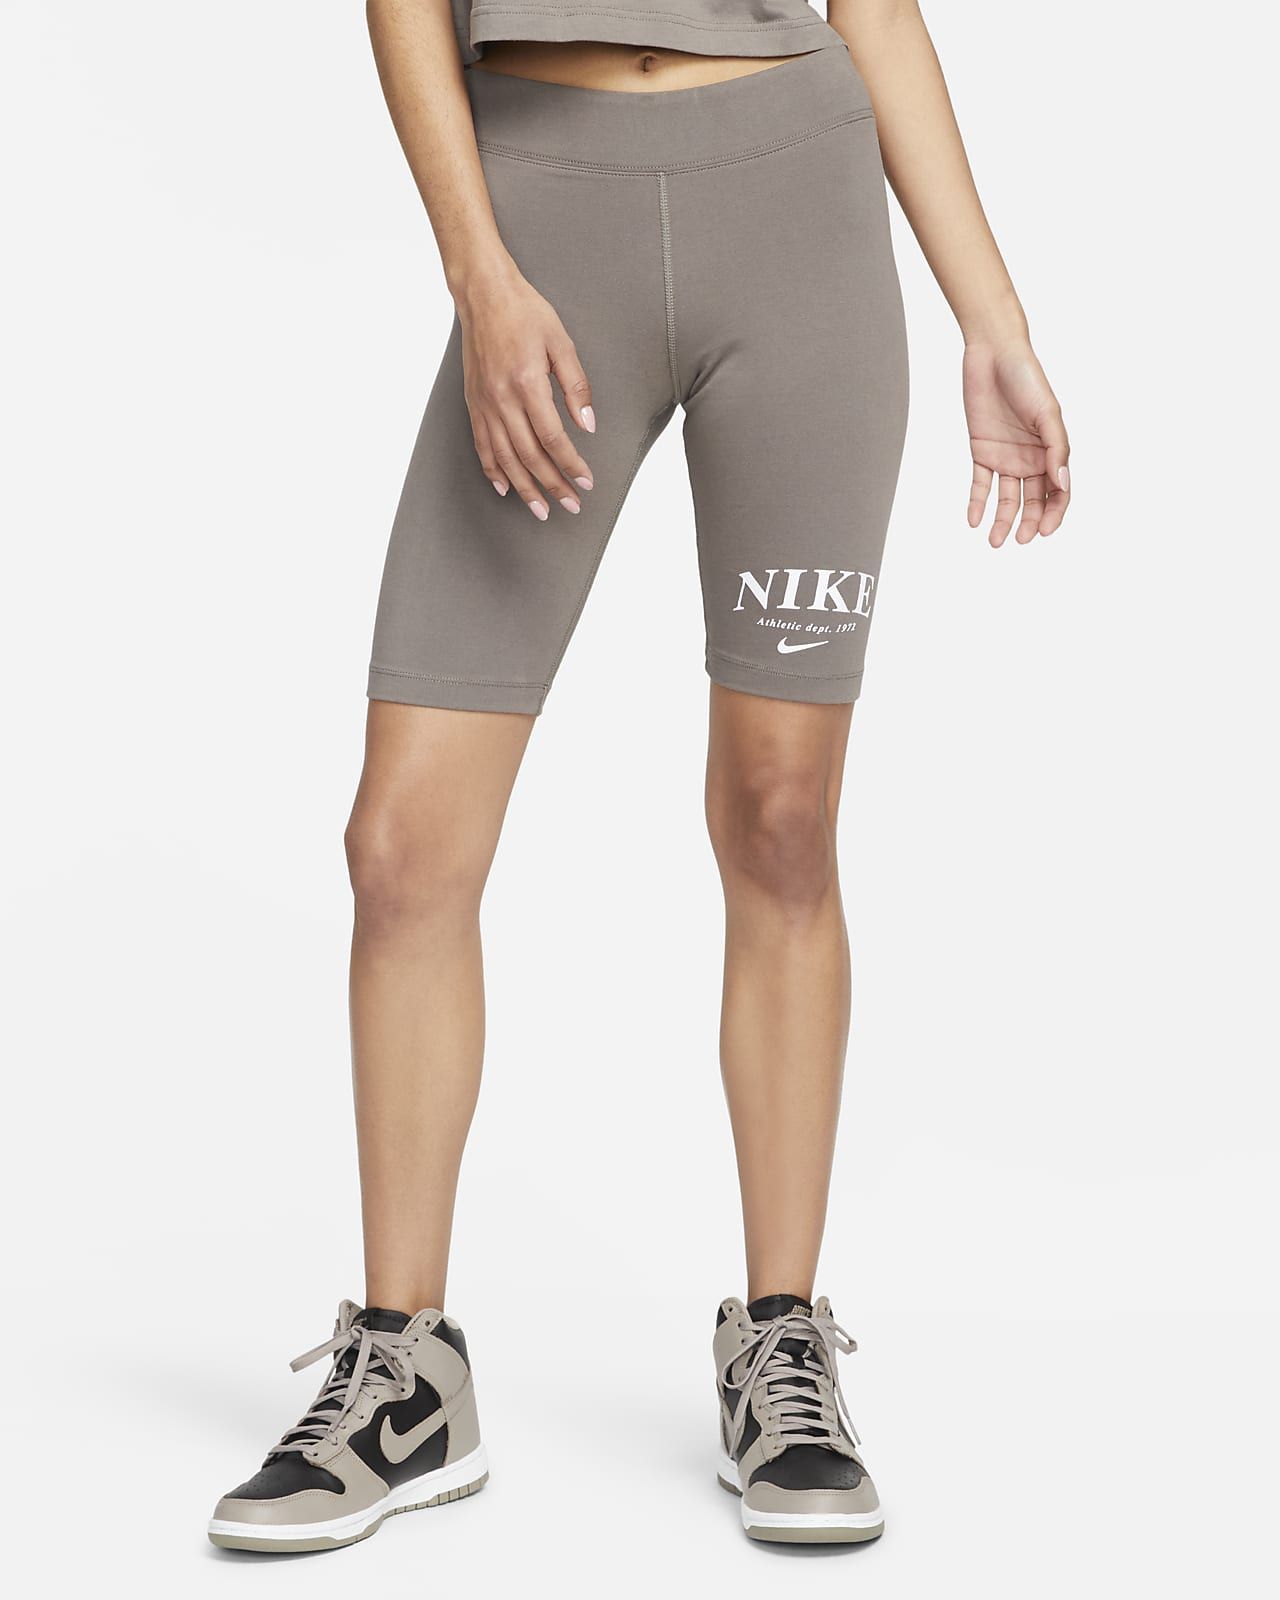 Nike Sportswear Women's Mid-Rise Bike Shorts. Nike.com | Nike (US)